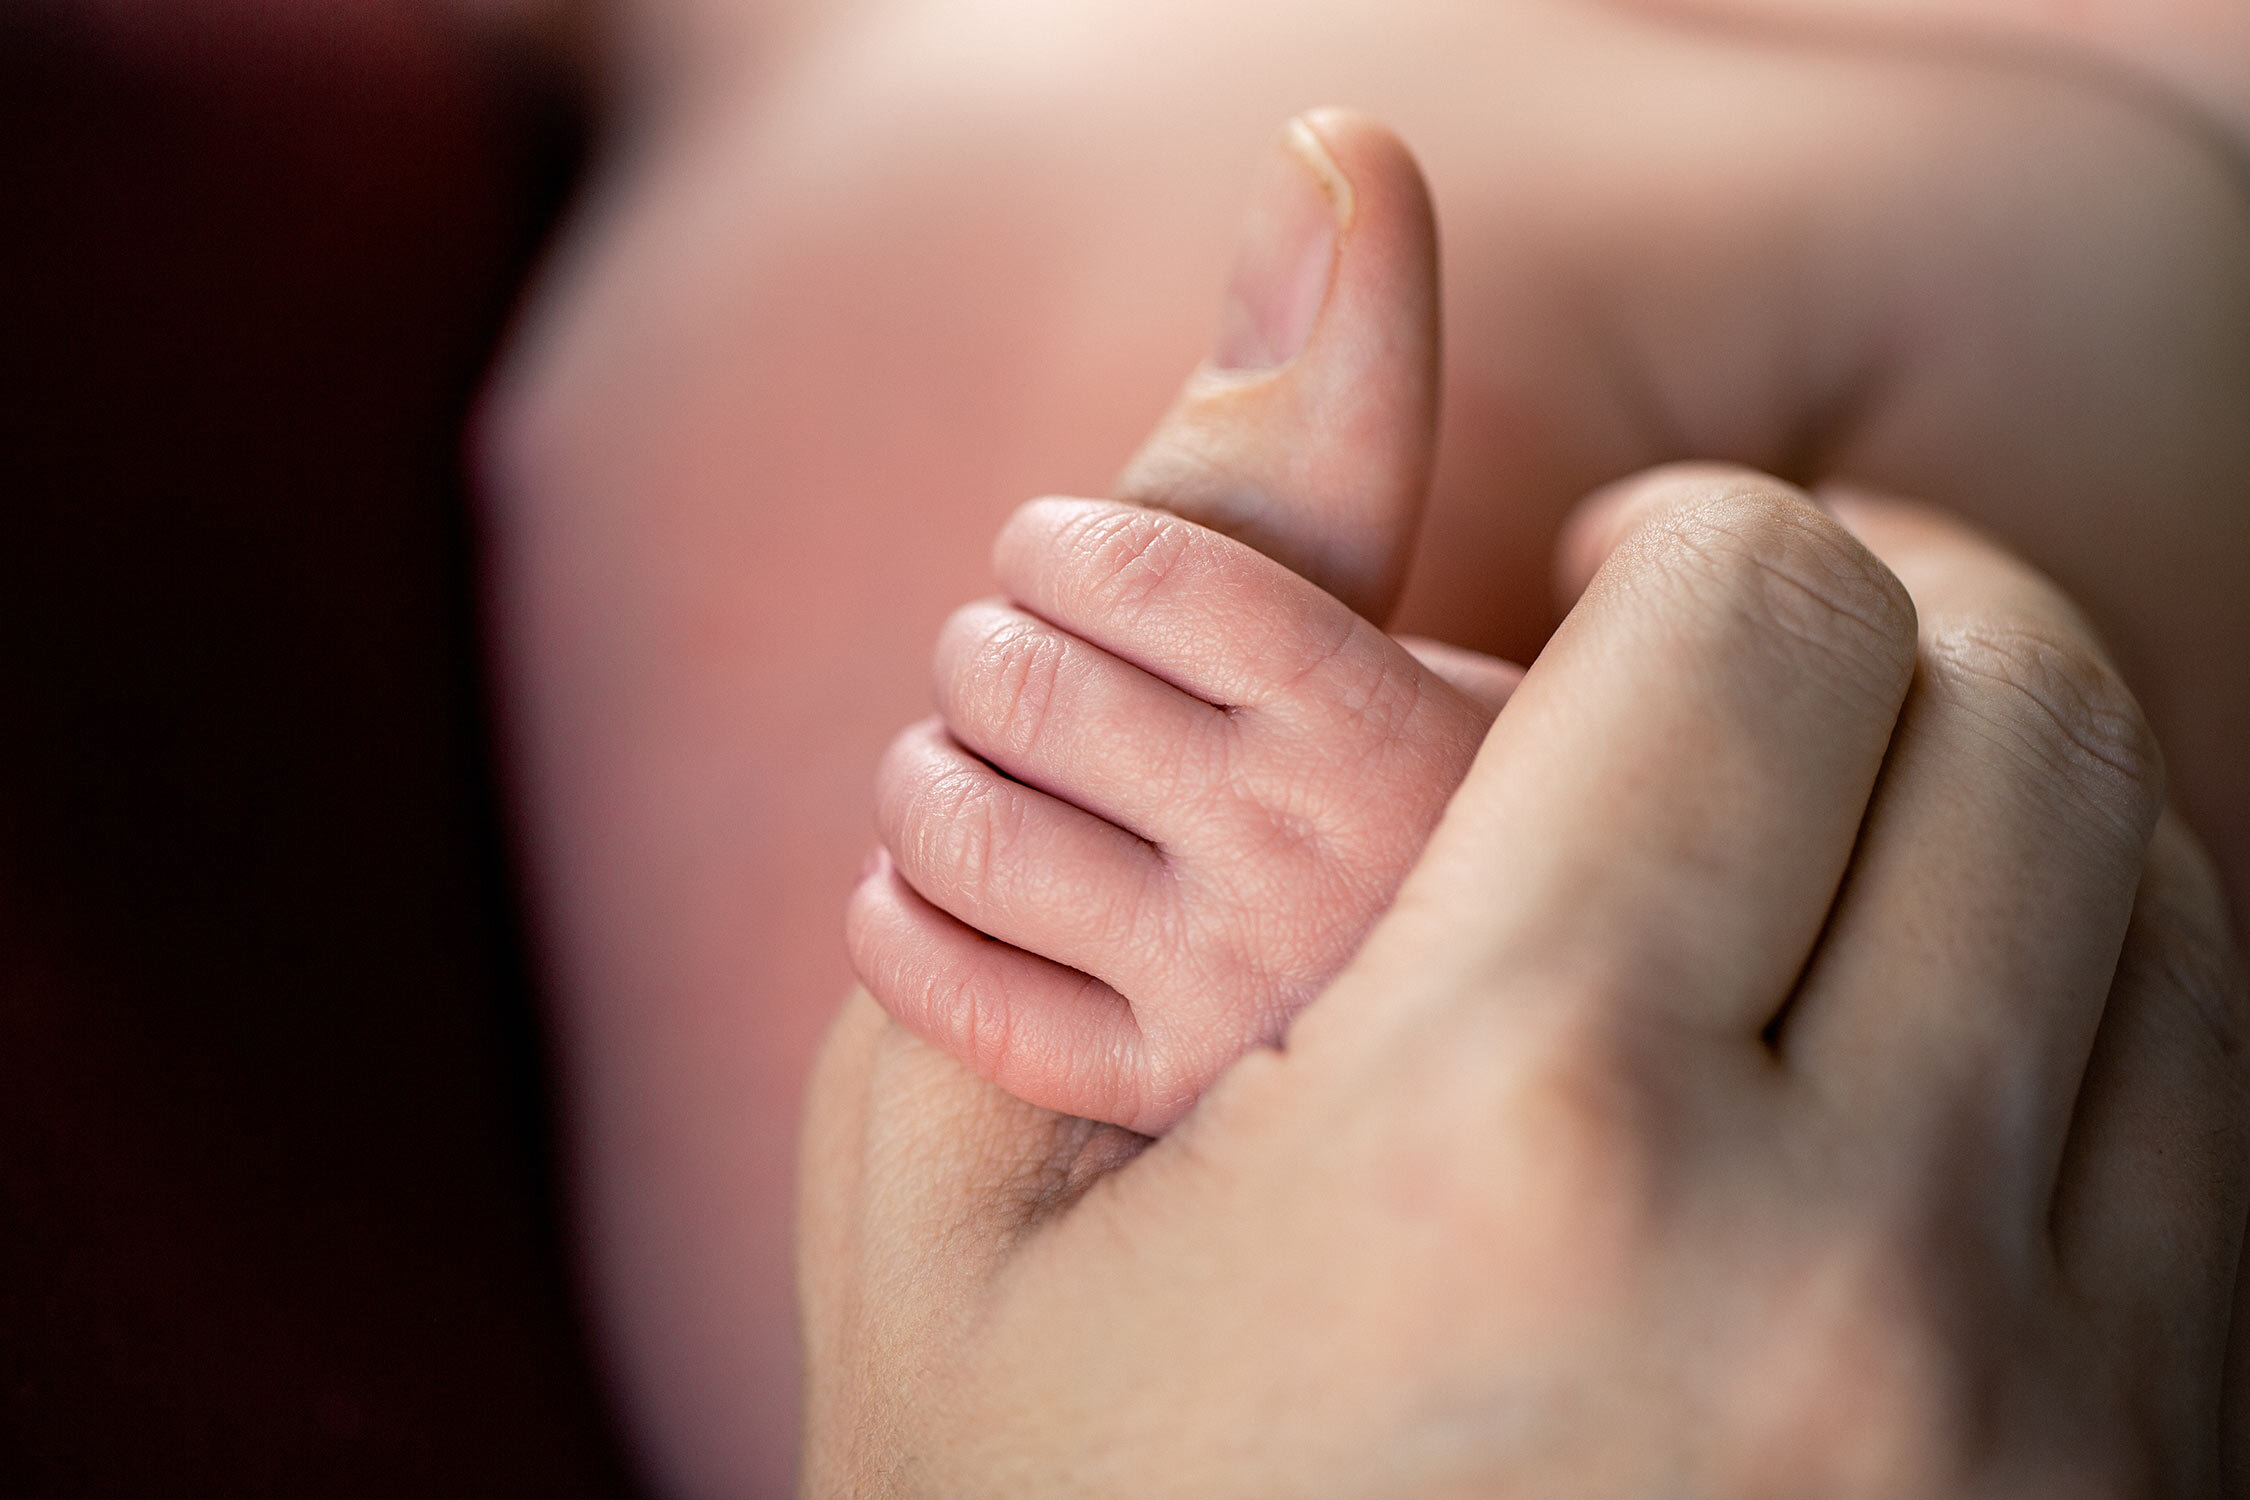 newborn-hands-location-photographer-cambridge.jpg